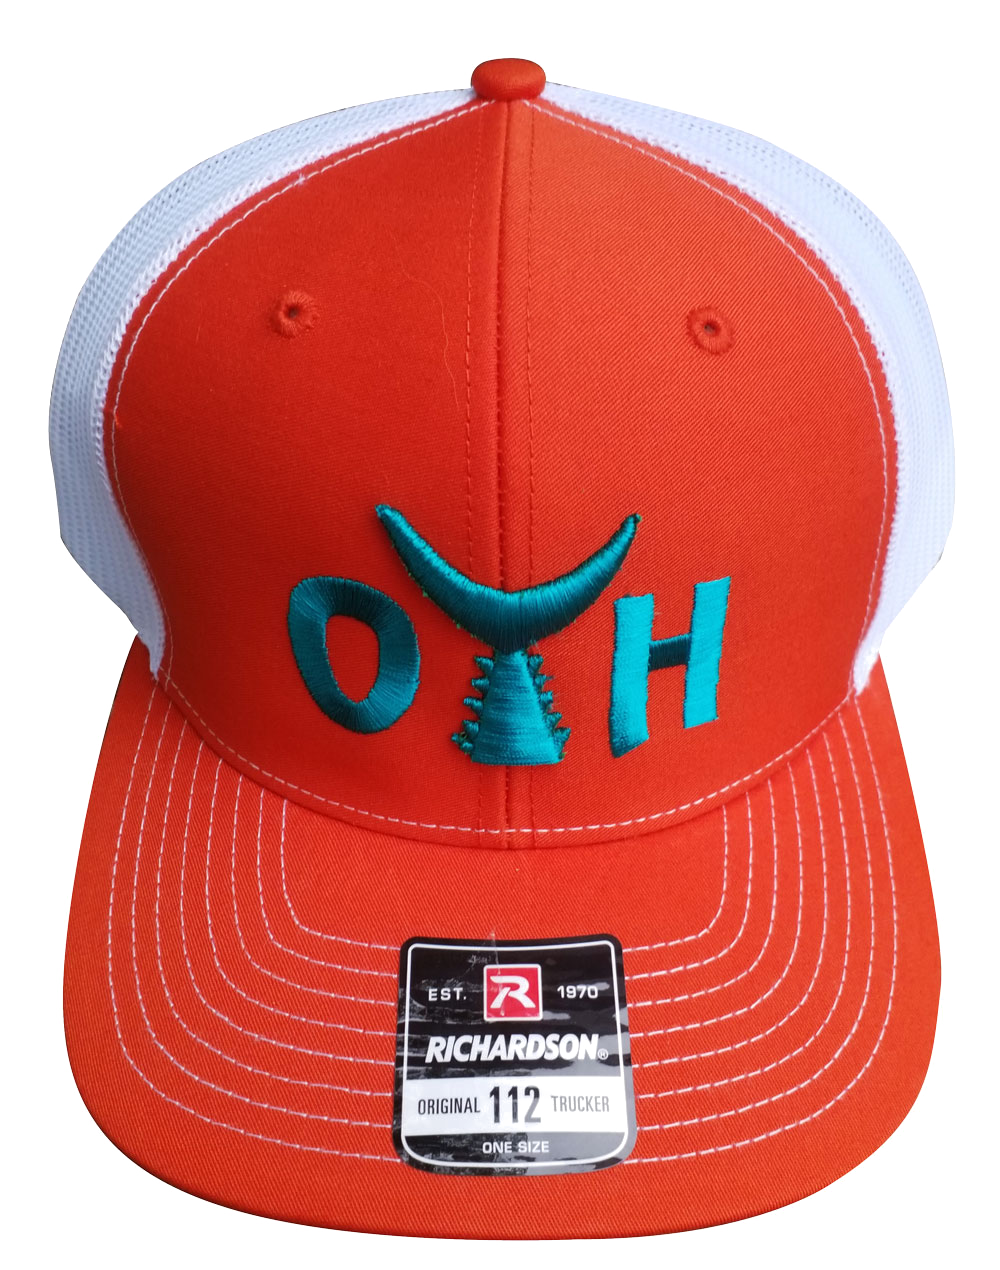 O.T.H.Tuna Tail Orange and Teal Adjustable Hat